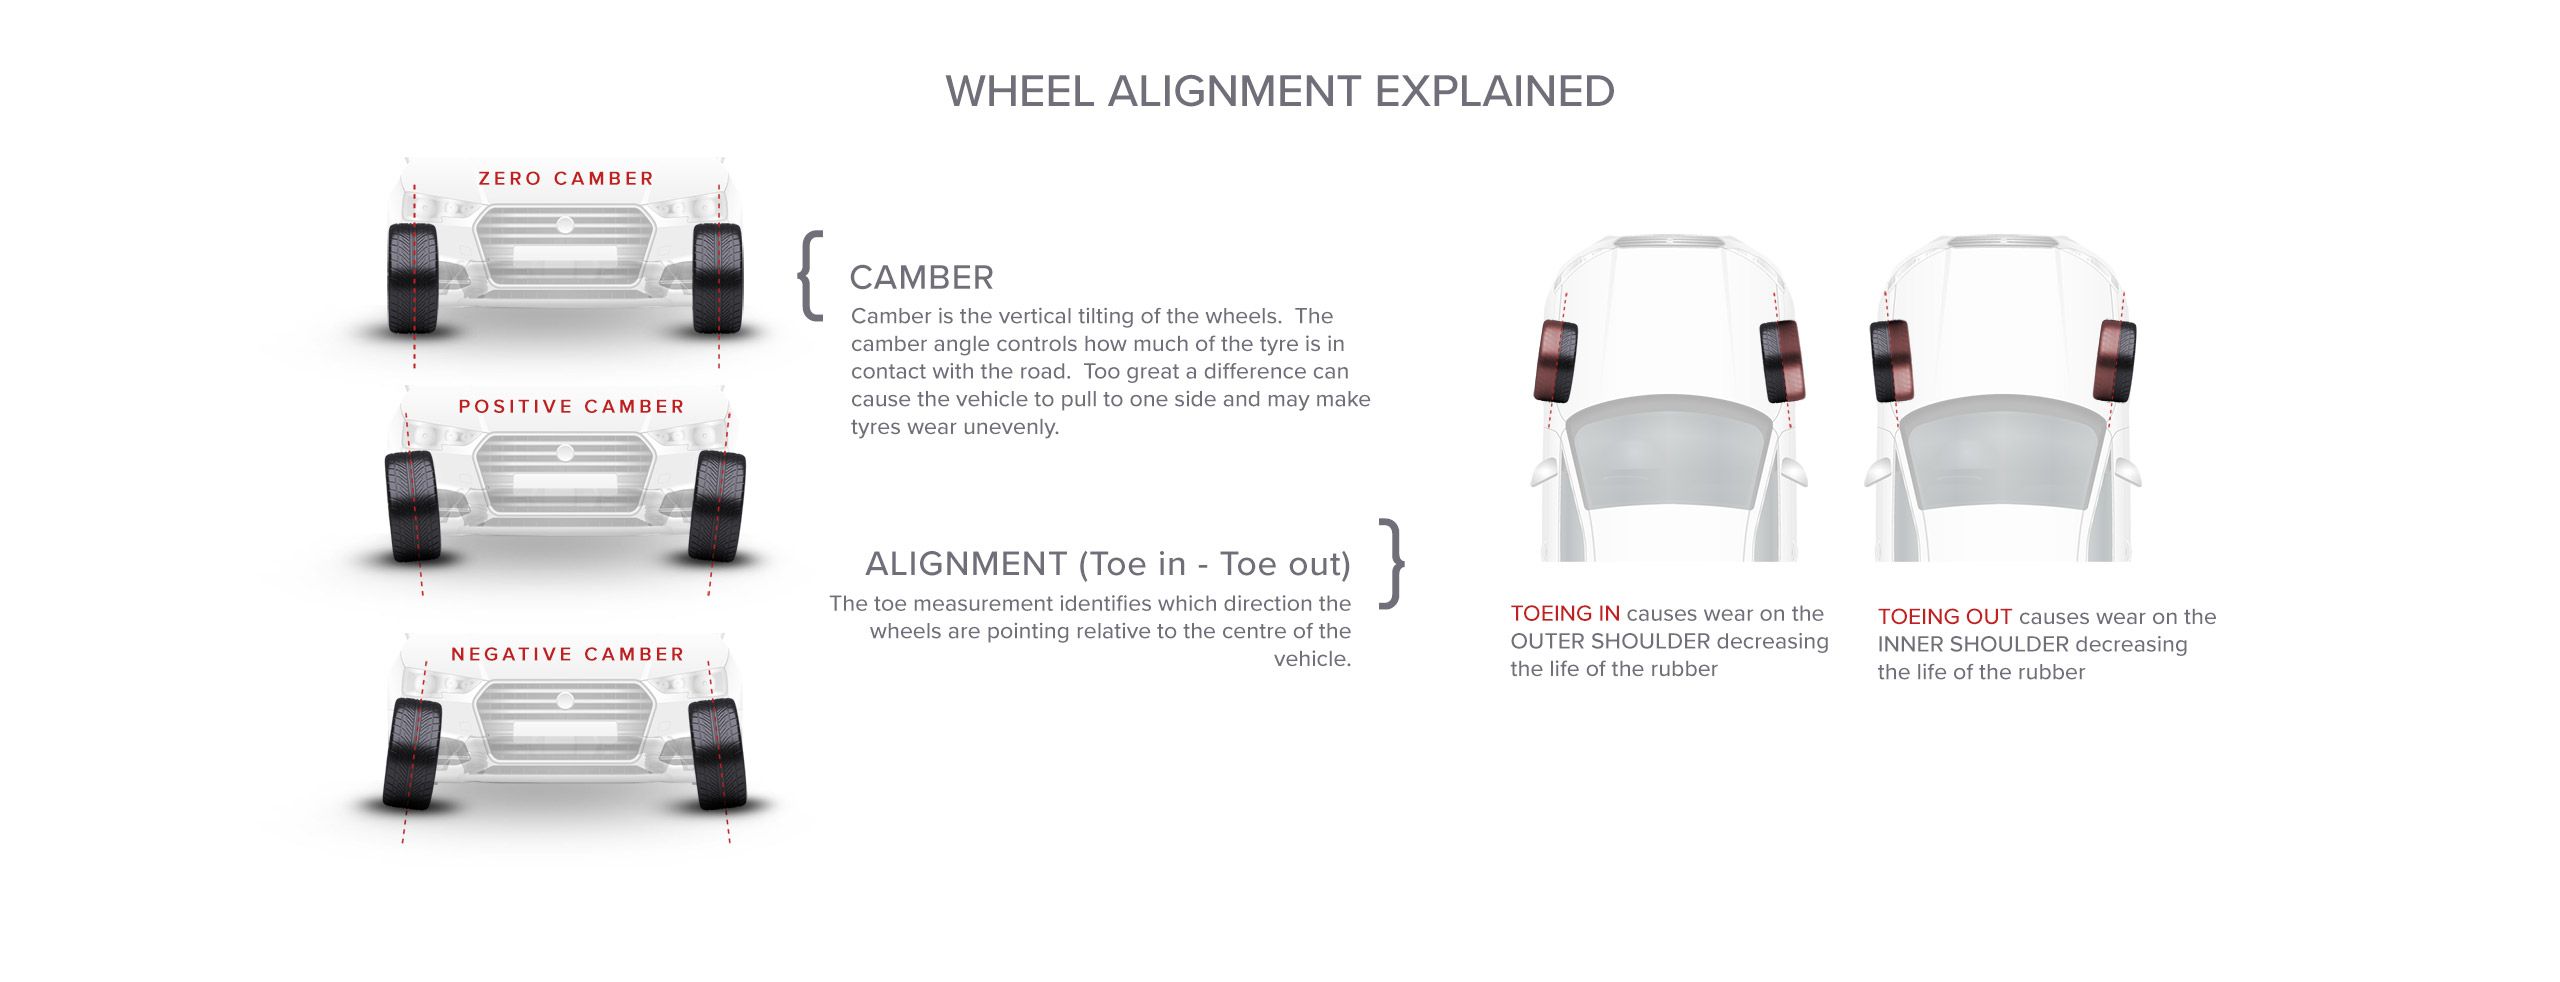 Wheel Alignment explained